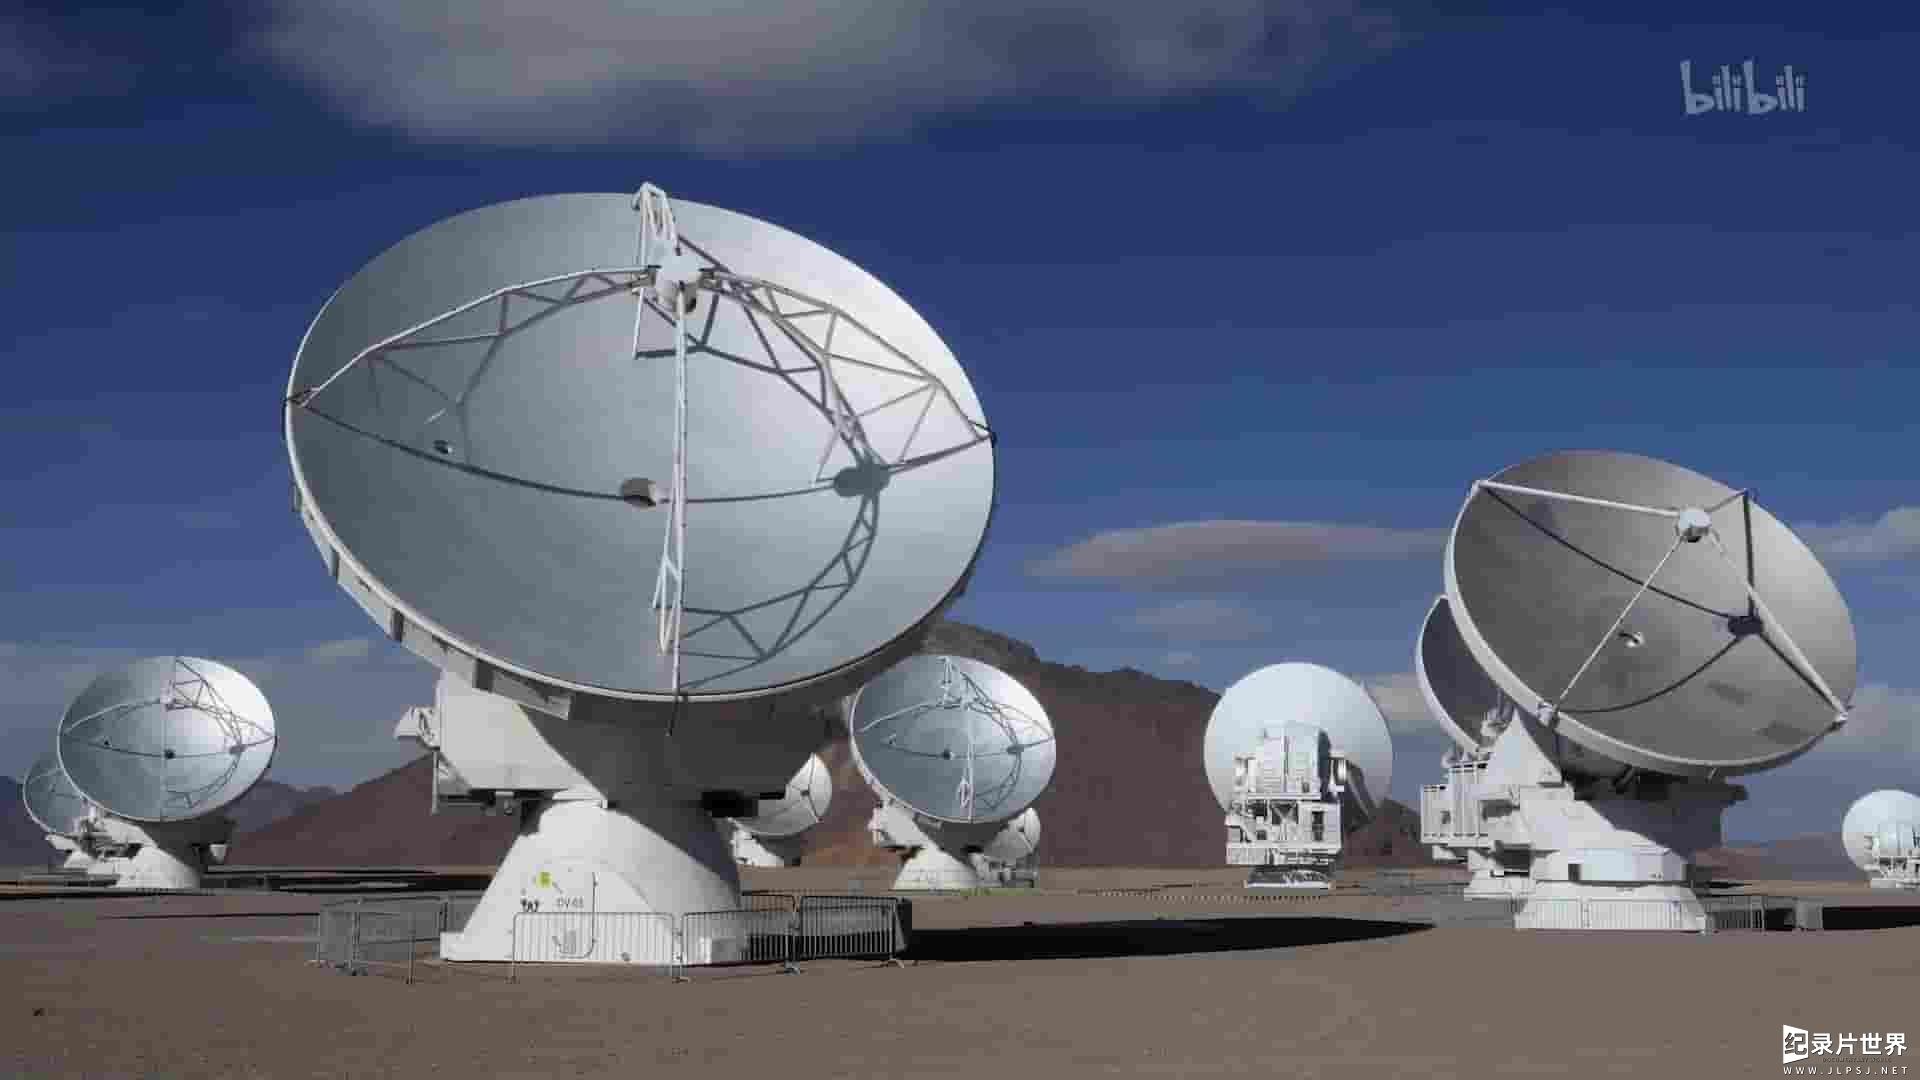  NASA纪录片《自然科技-世界最强天文望远镜 The World's Most Powerful Telescopes》全1集